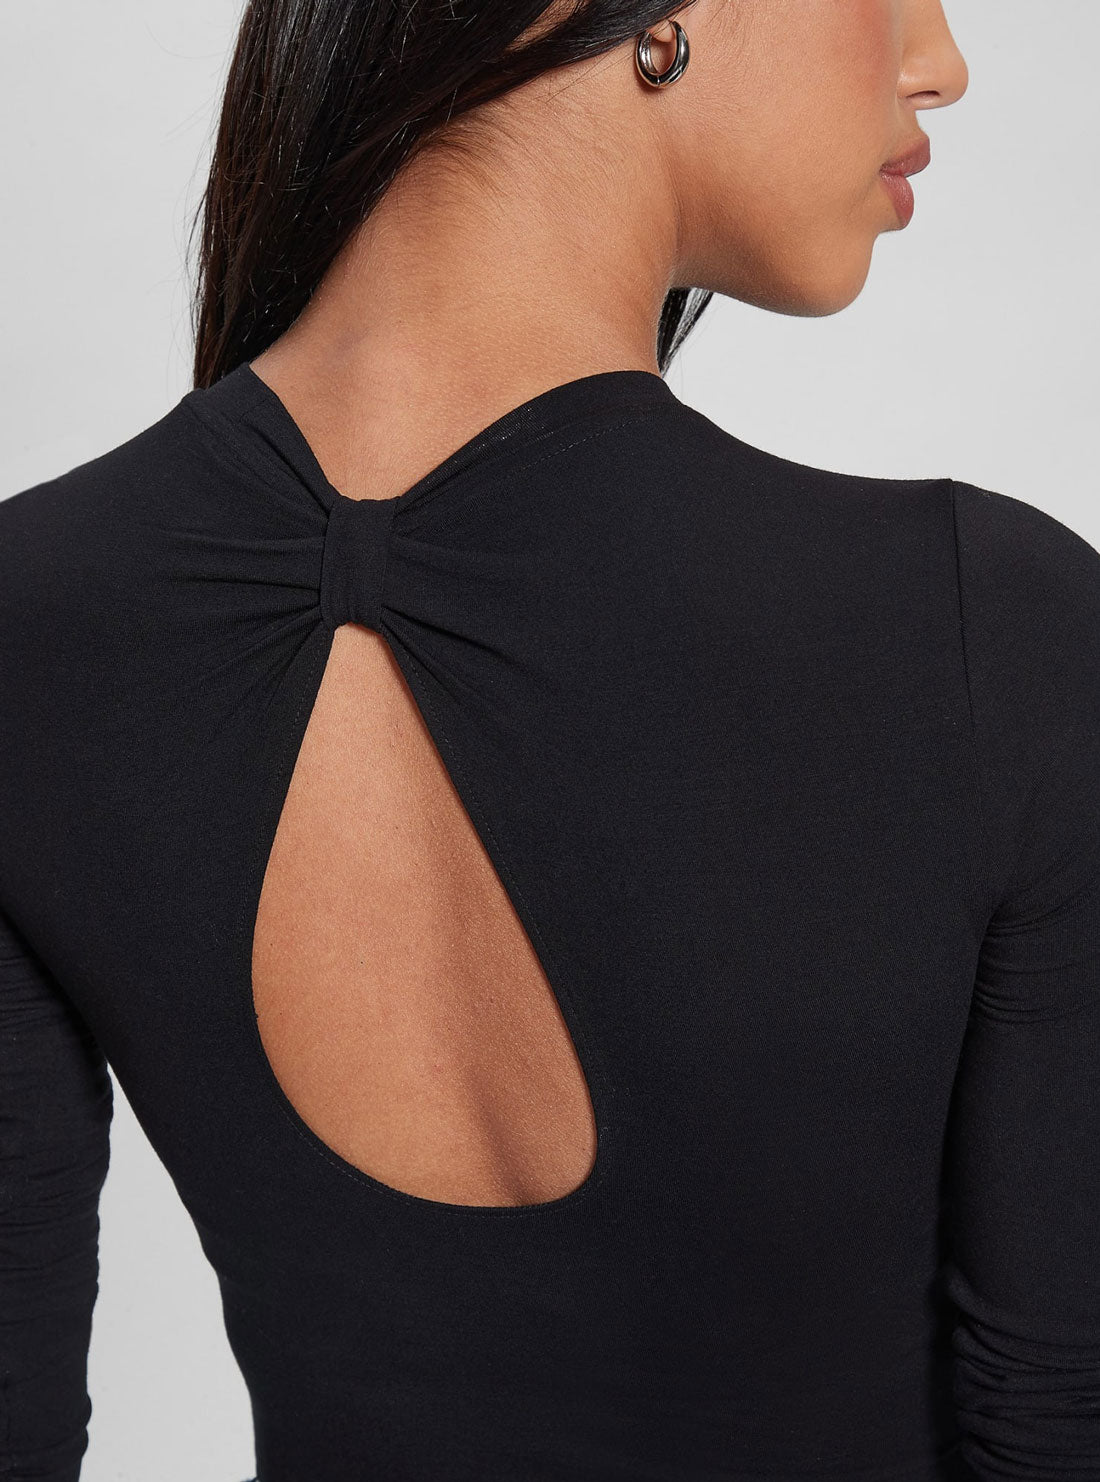 Black Rhinestone Triangle Logo Bodysuit | GUESS Women's Apparel | back view detail